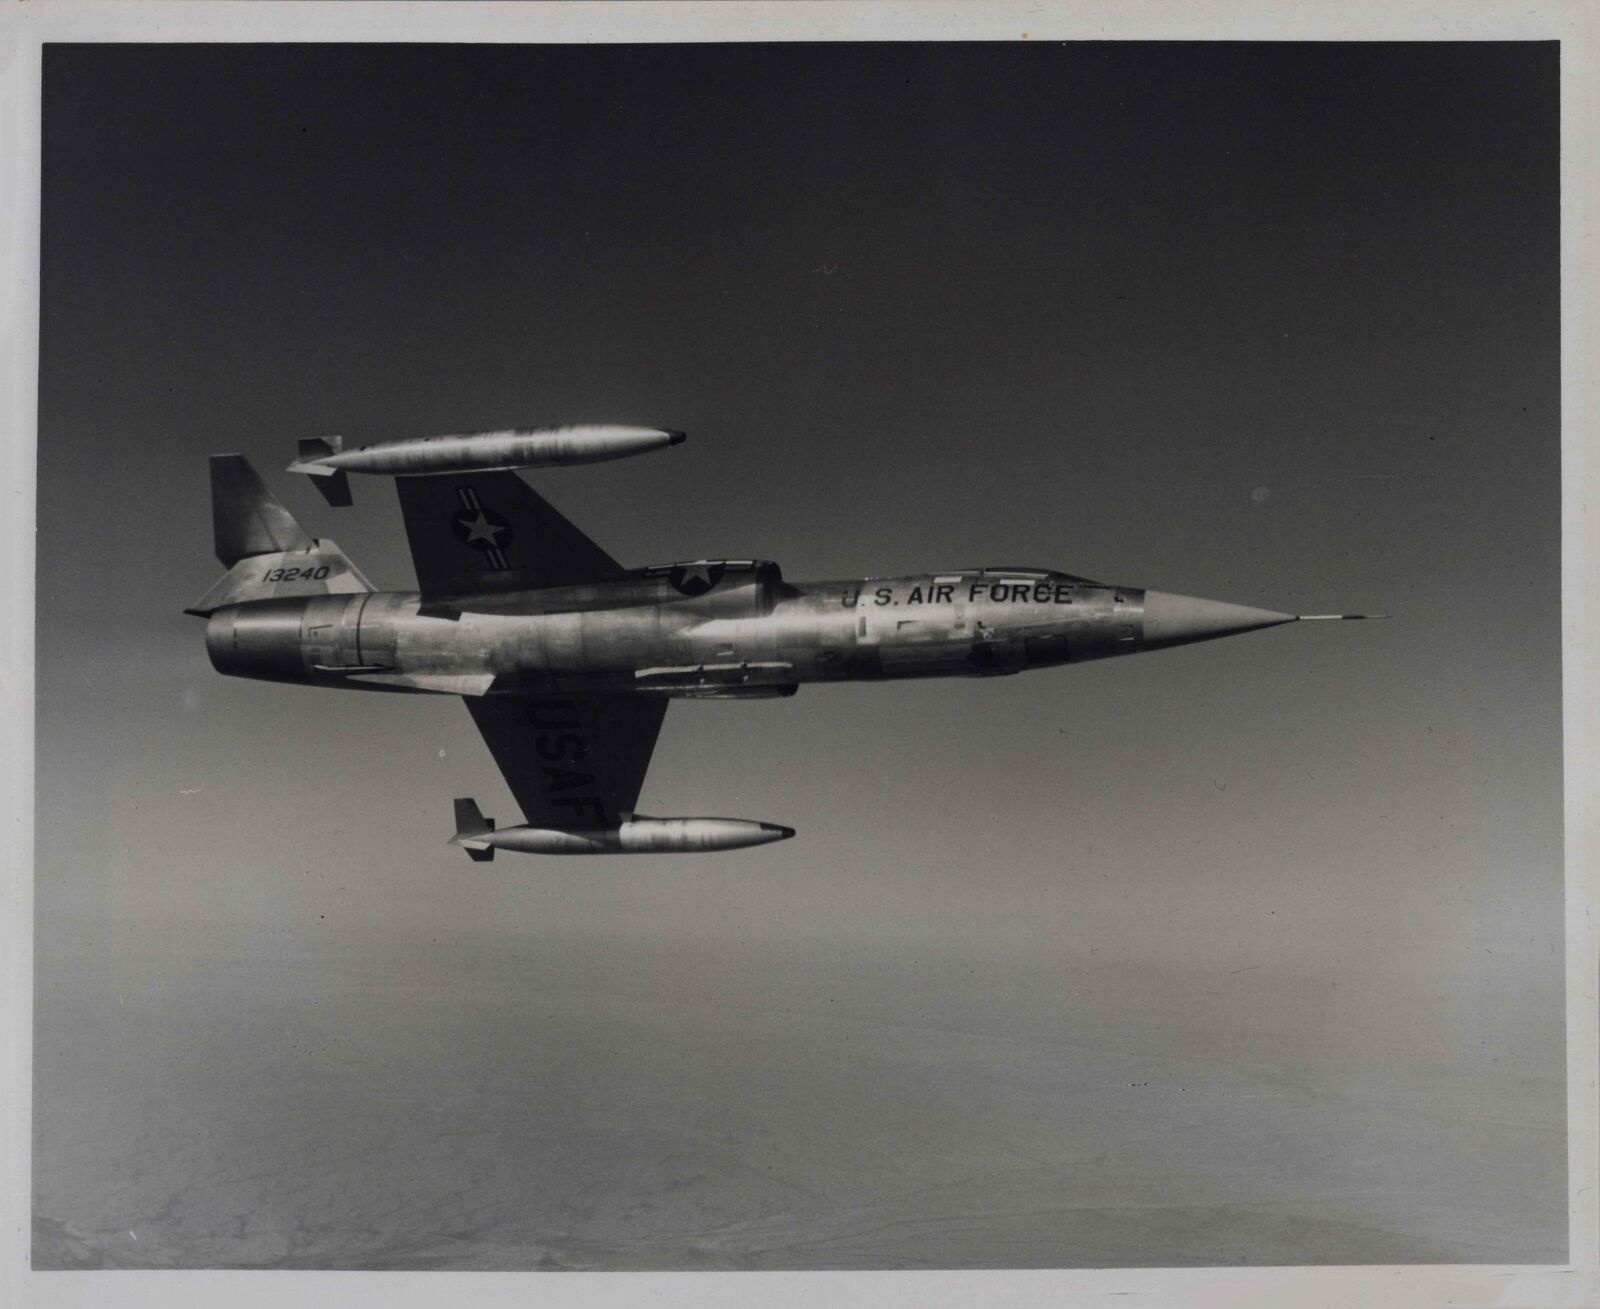 LOCKHEED F-104G STARFIGHTER USAF GERMAN AIR FORCE MANUFACTURERS PHOTO